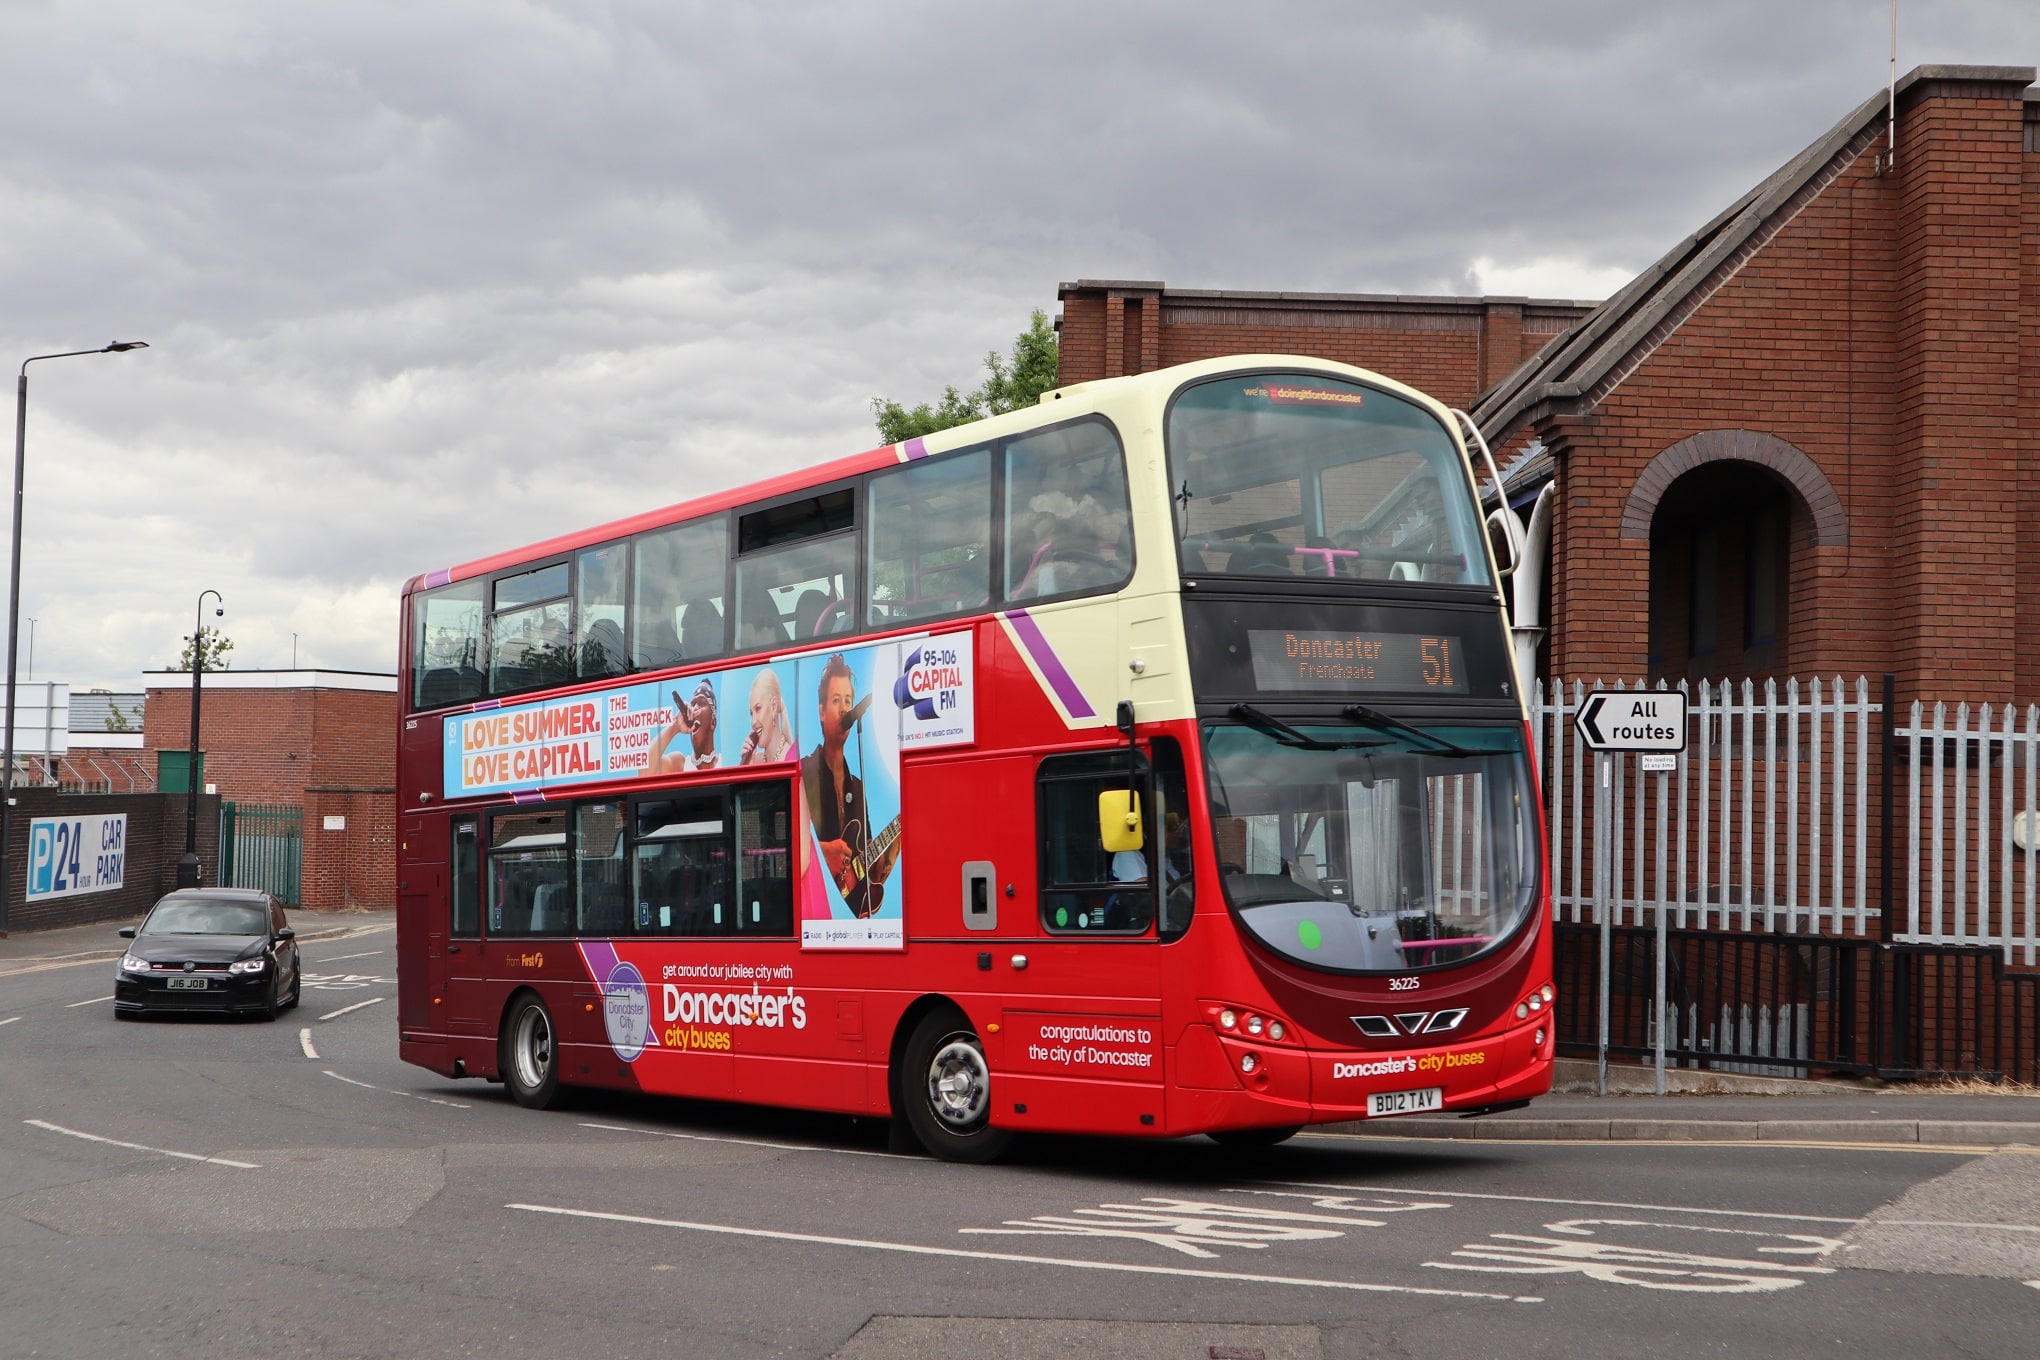 Labour provides further detail on bus reform plans